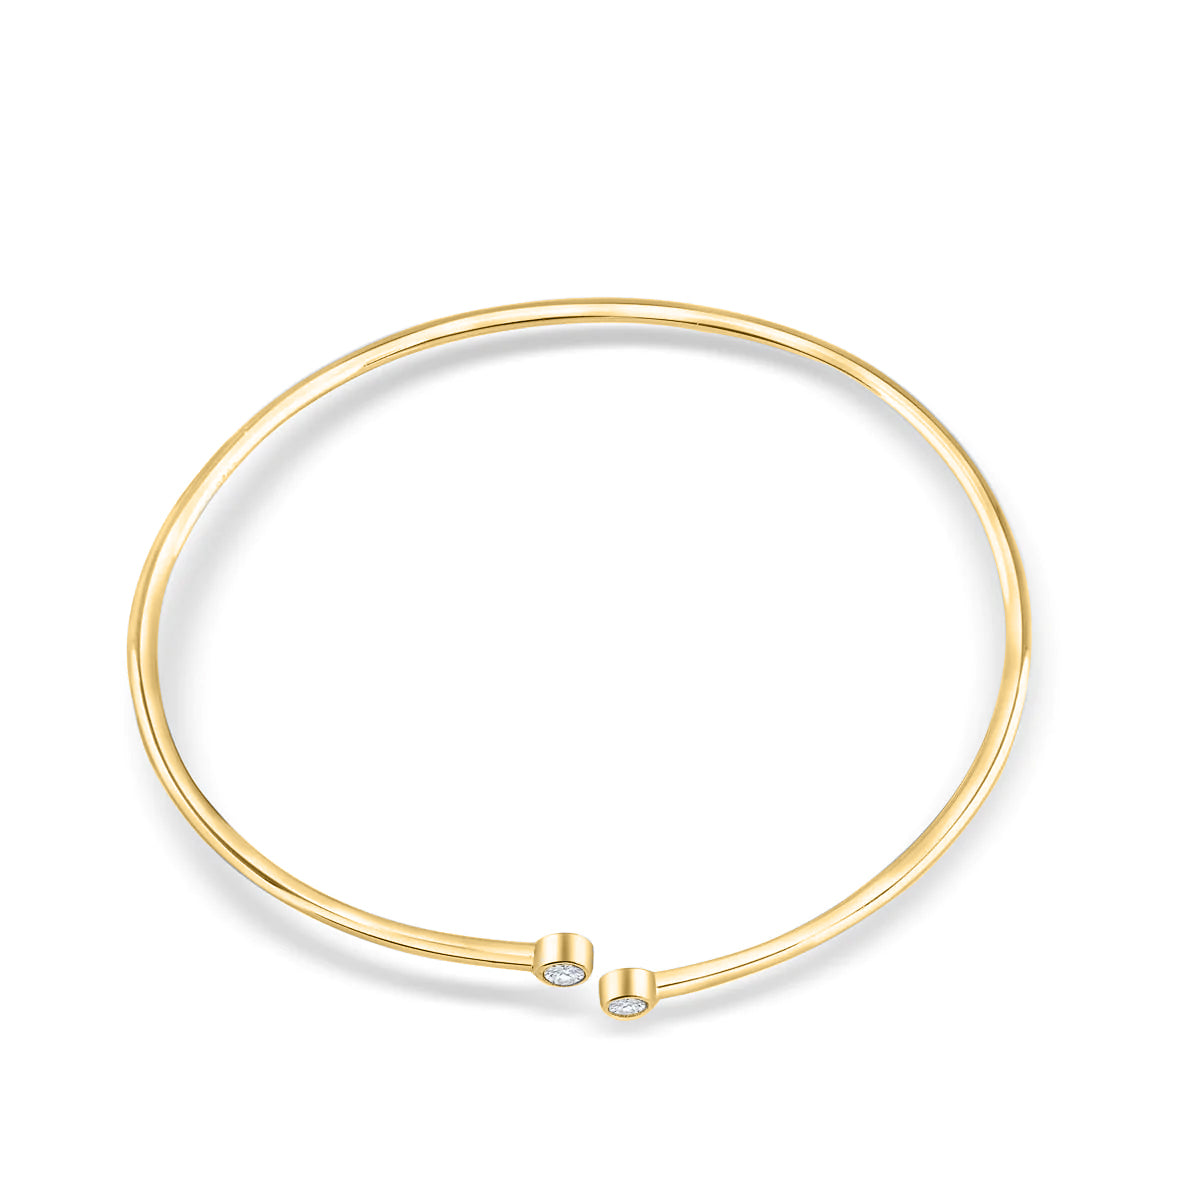 Simple gold bangle bracelet